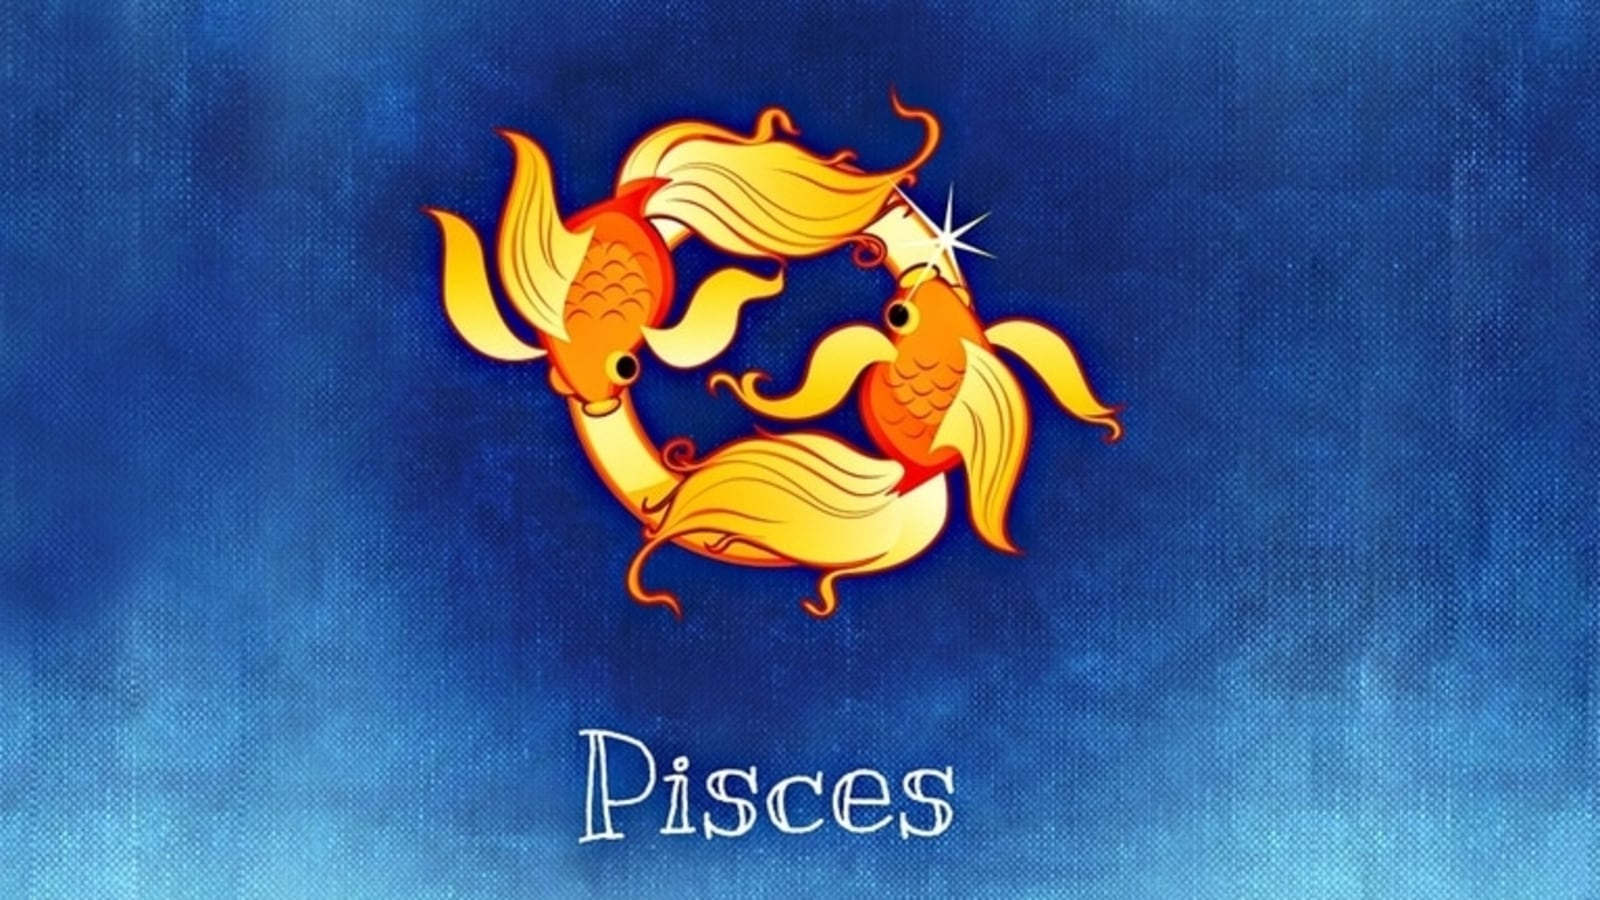 pisces daily horoscope 2015